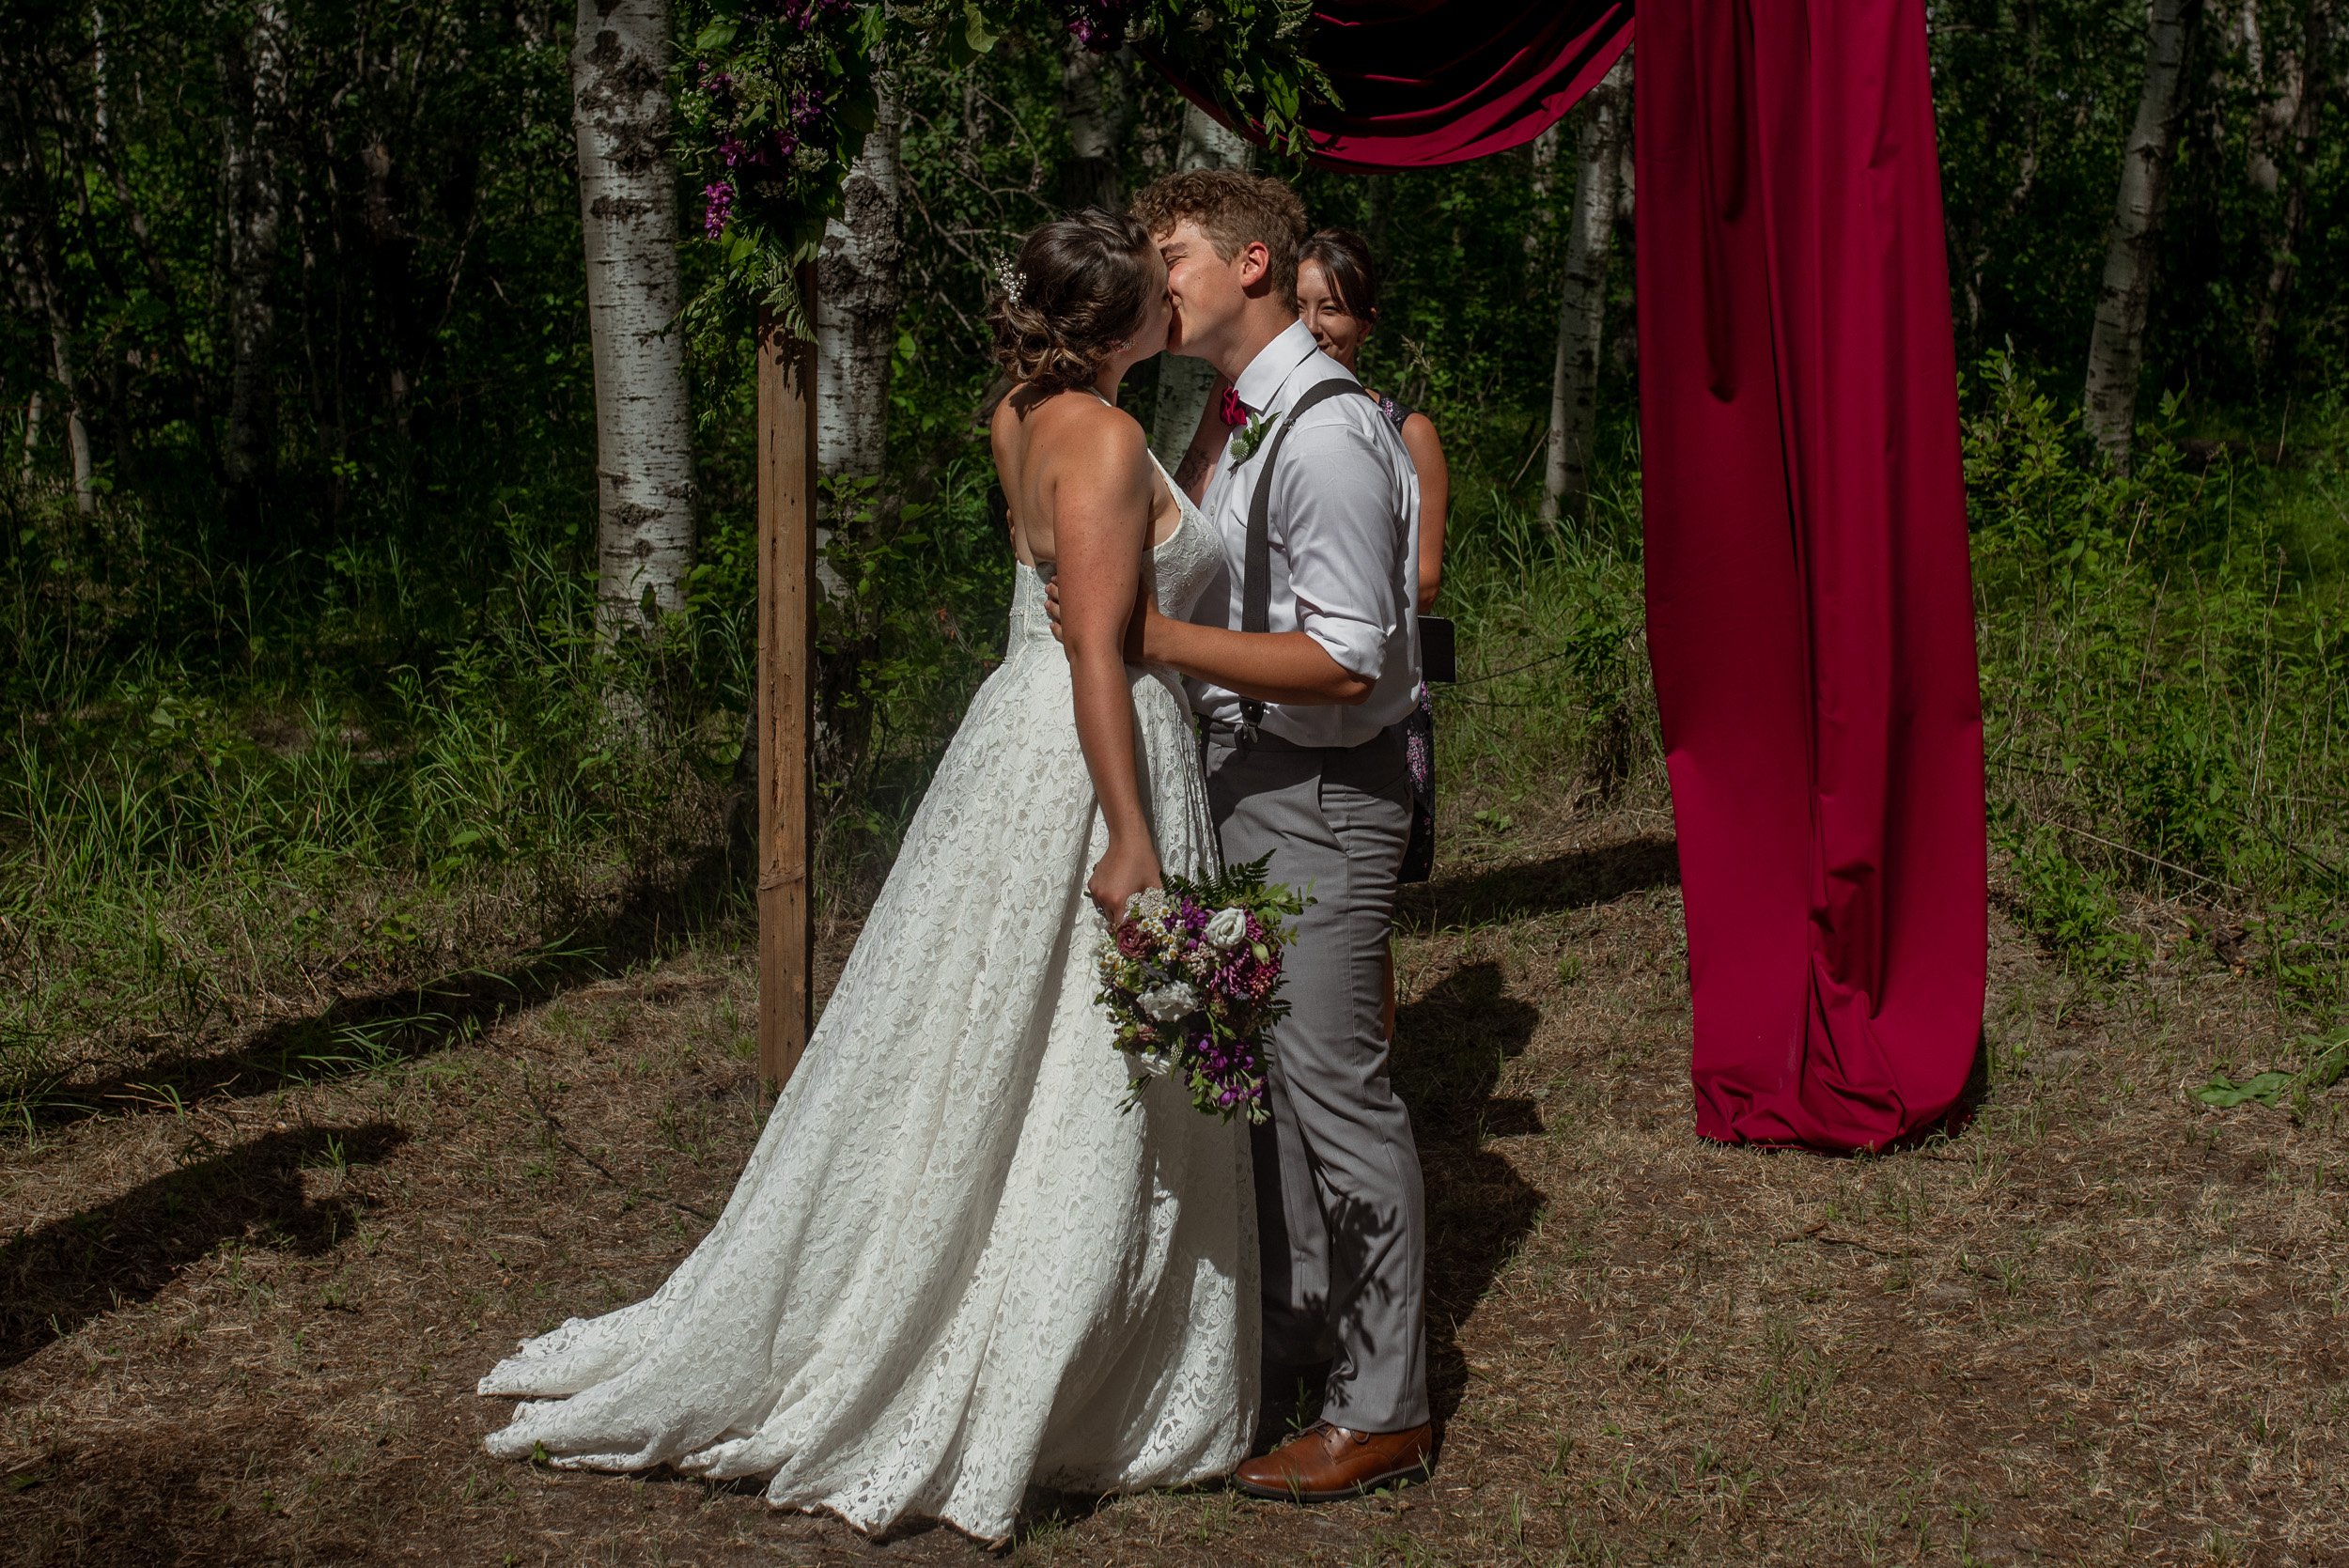 winnipeg wedding photographer - country wedding couple outdoor ceremony -50.jpg